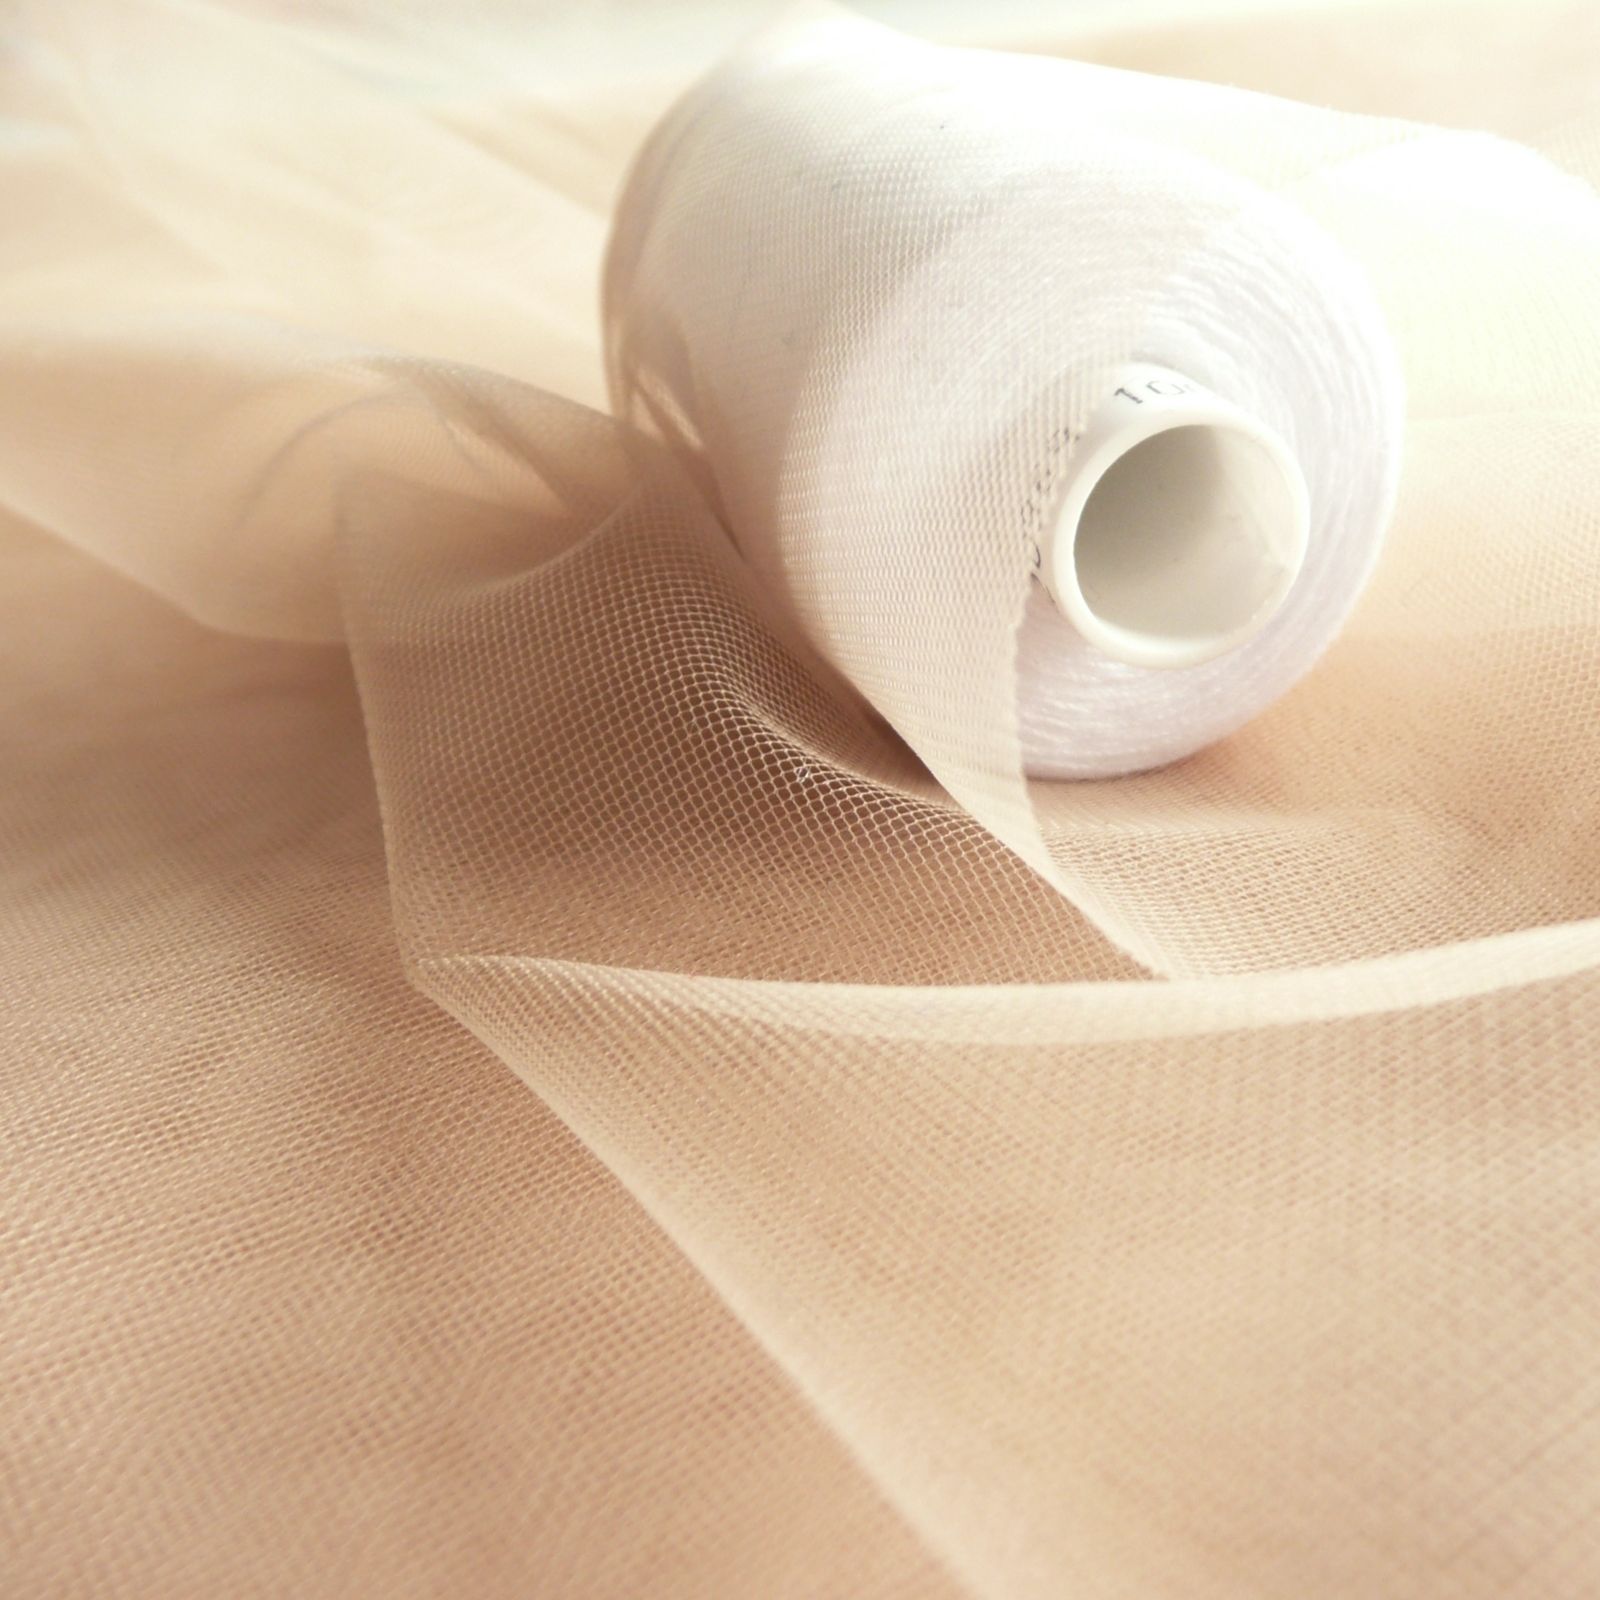 Super fine soft nude skin flesh coloured illusion mesh tulle fabric 150cm wide